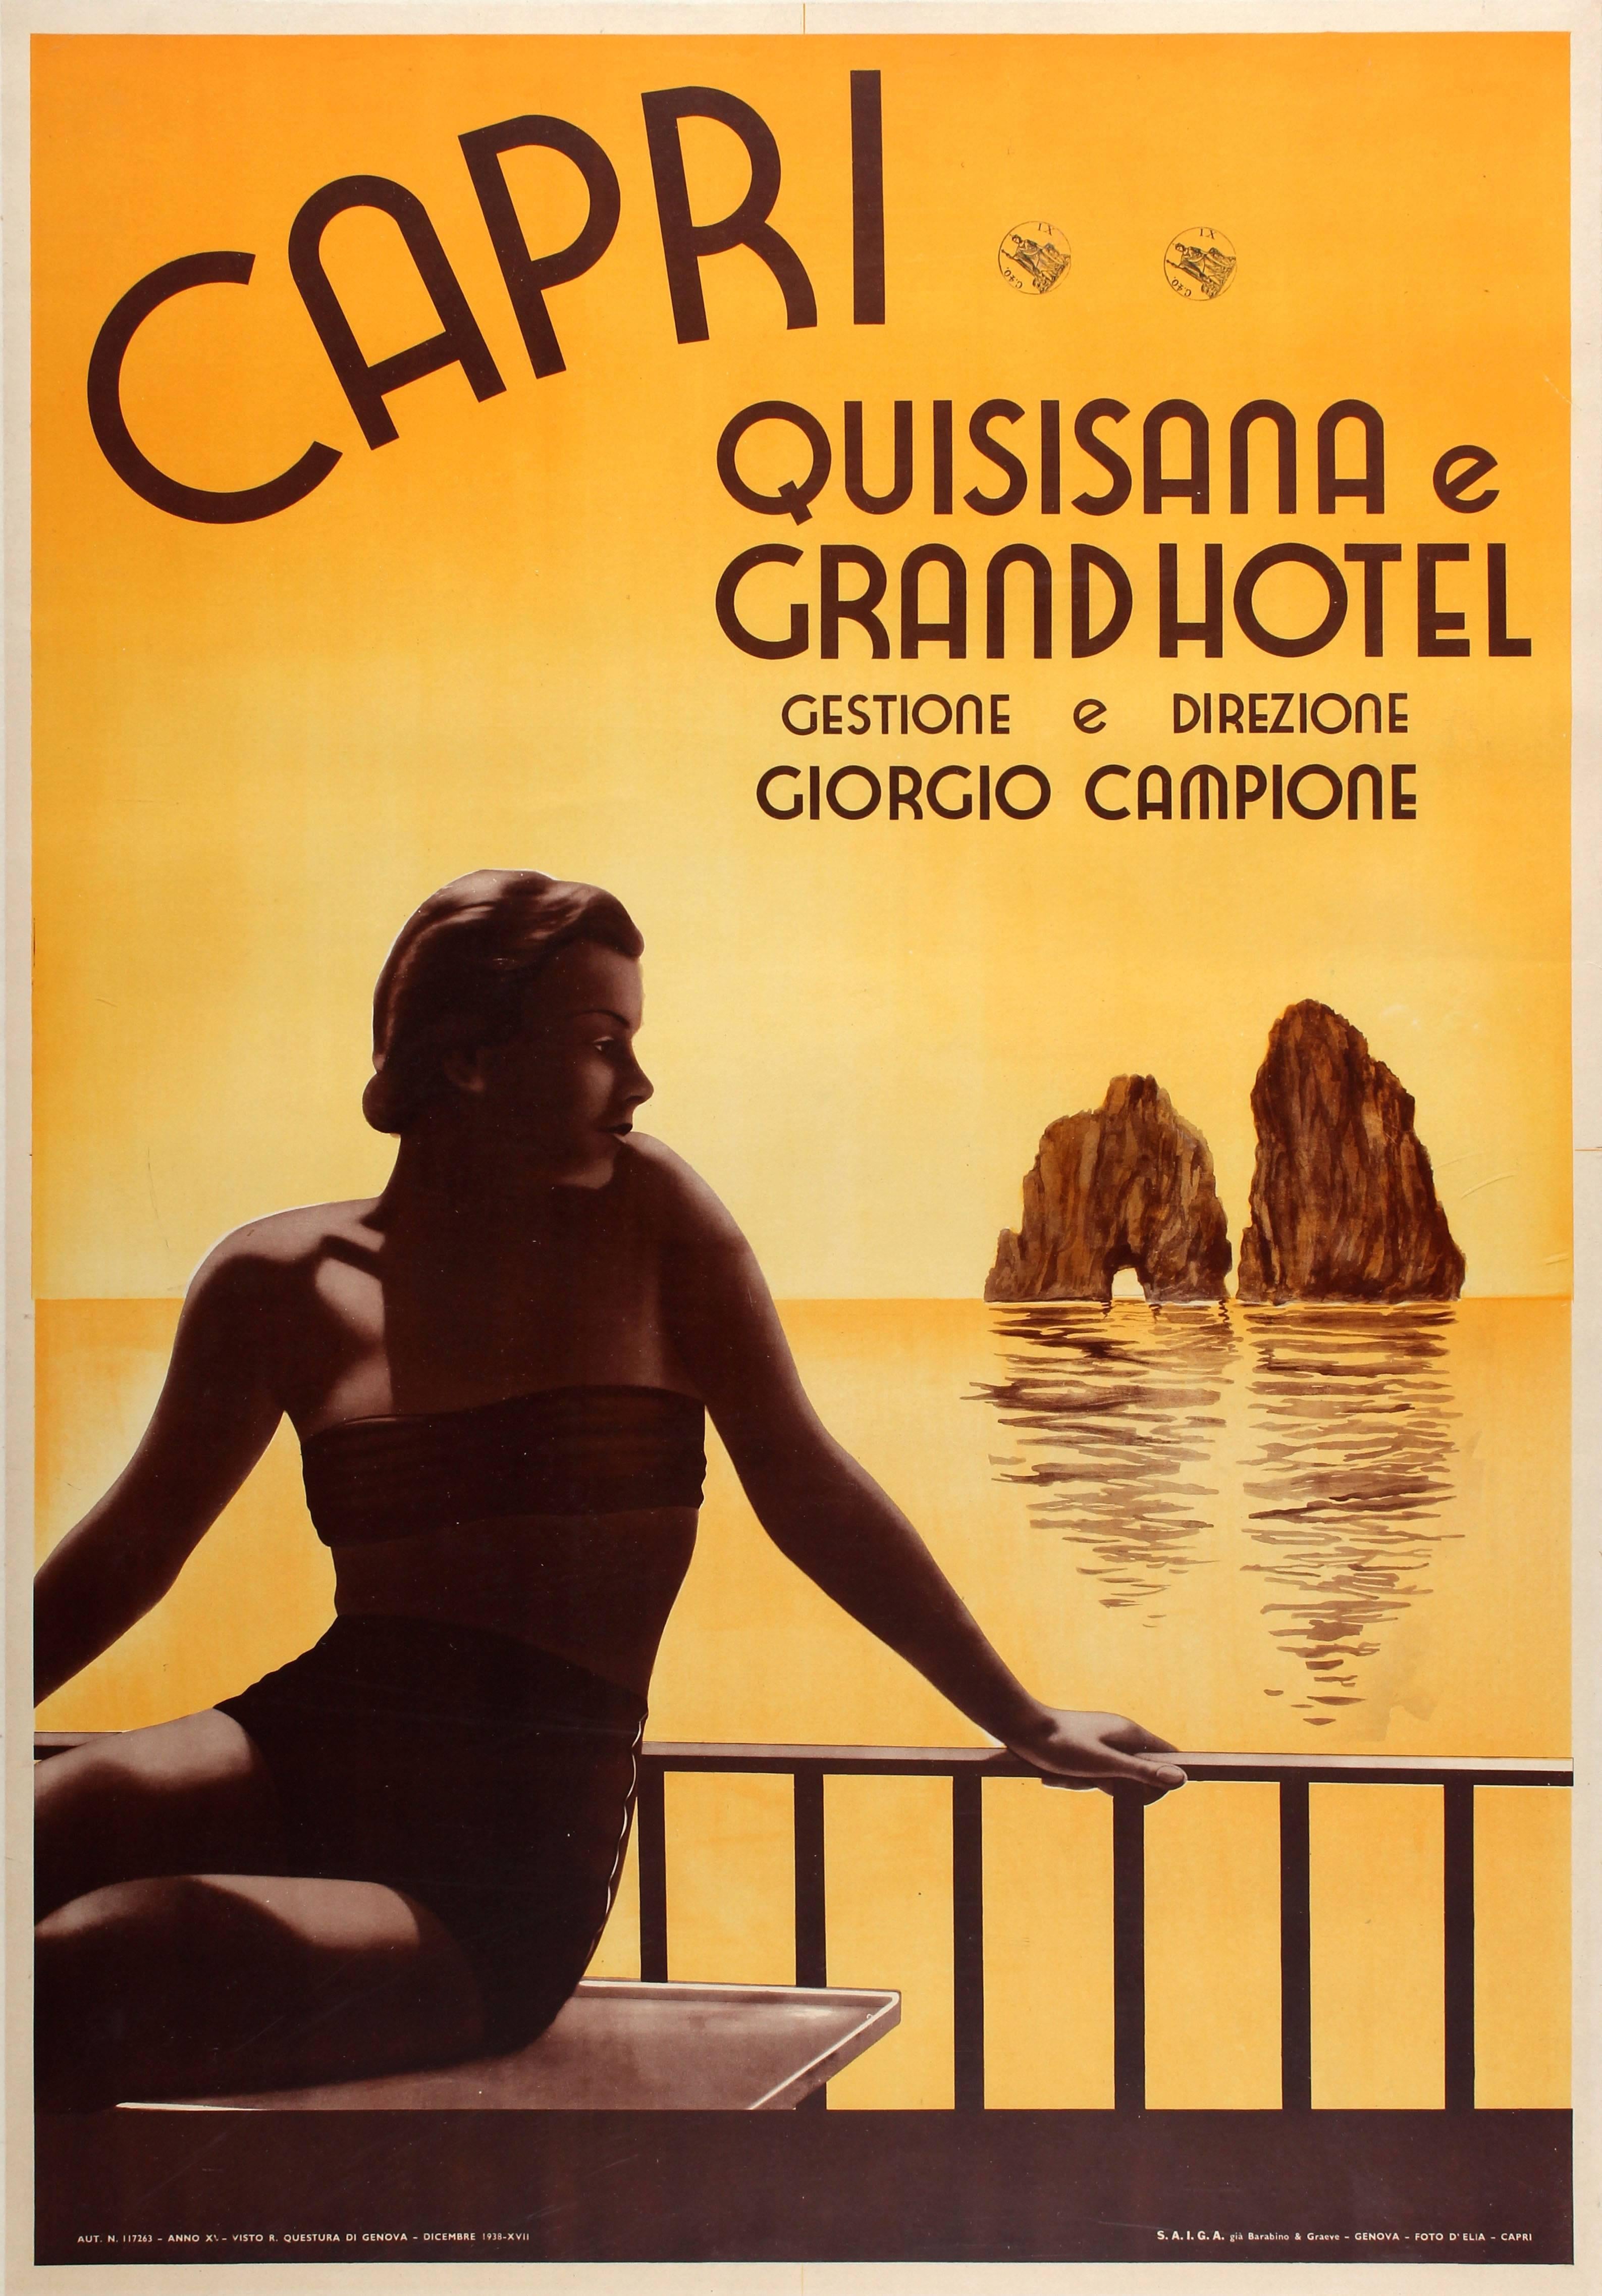 Unknown Print - Original Vintage Travel Poster Advertising The Grand Hotel Quisisana Capri Italy